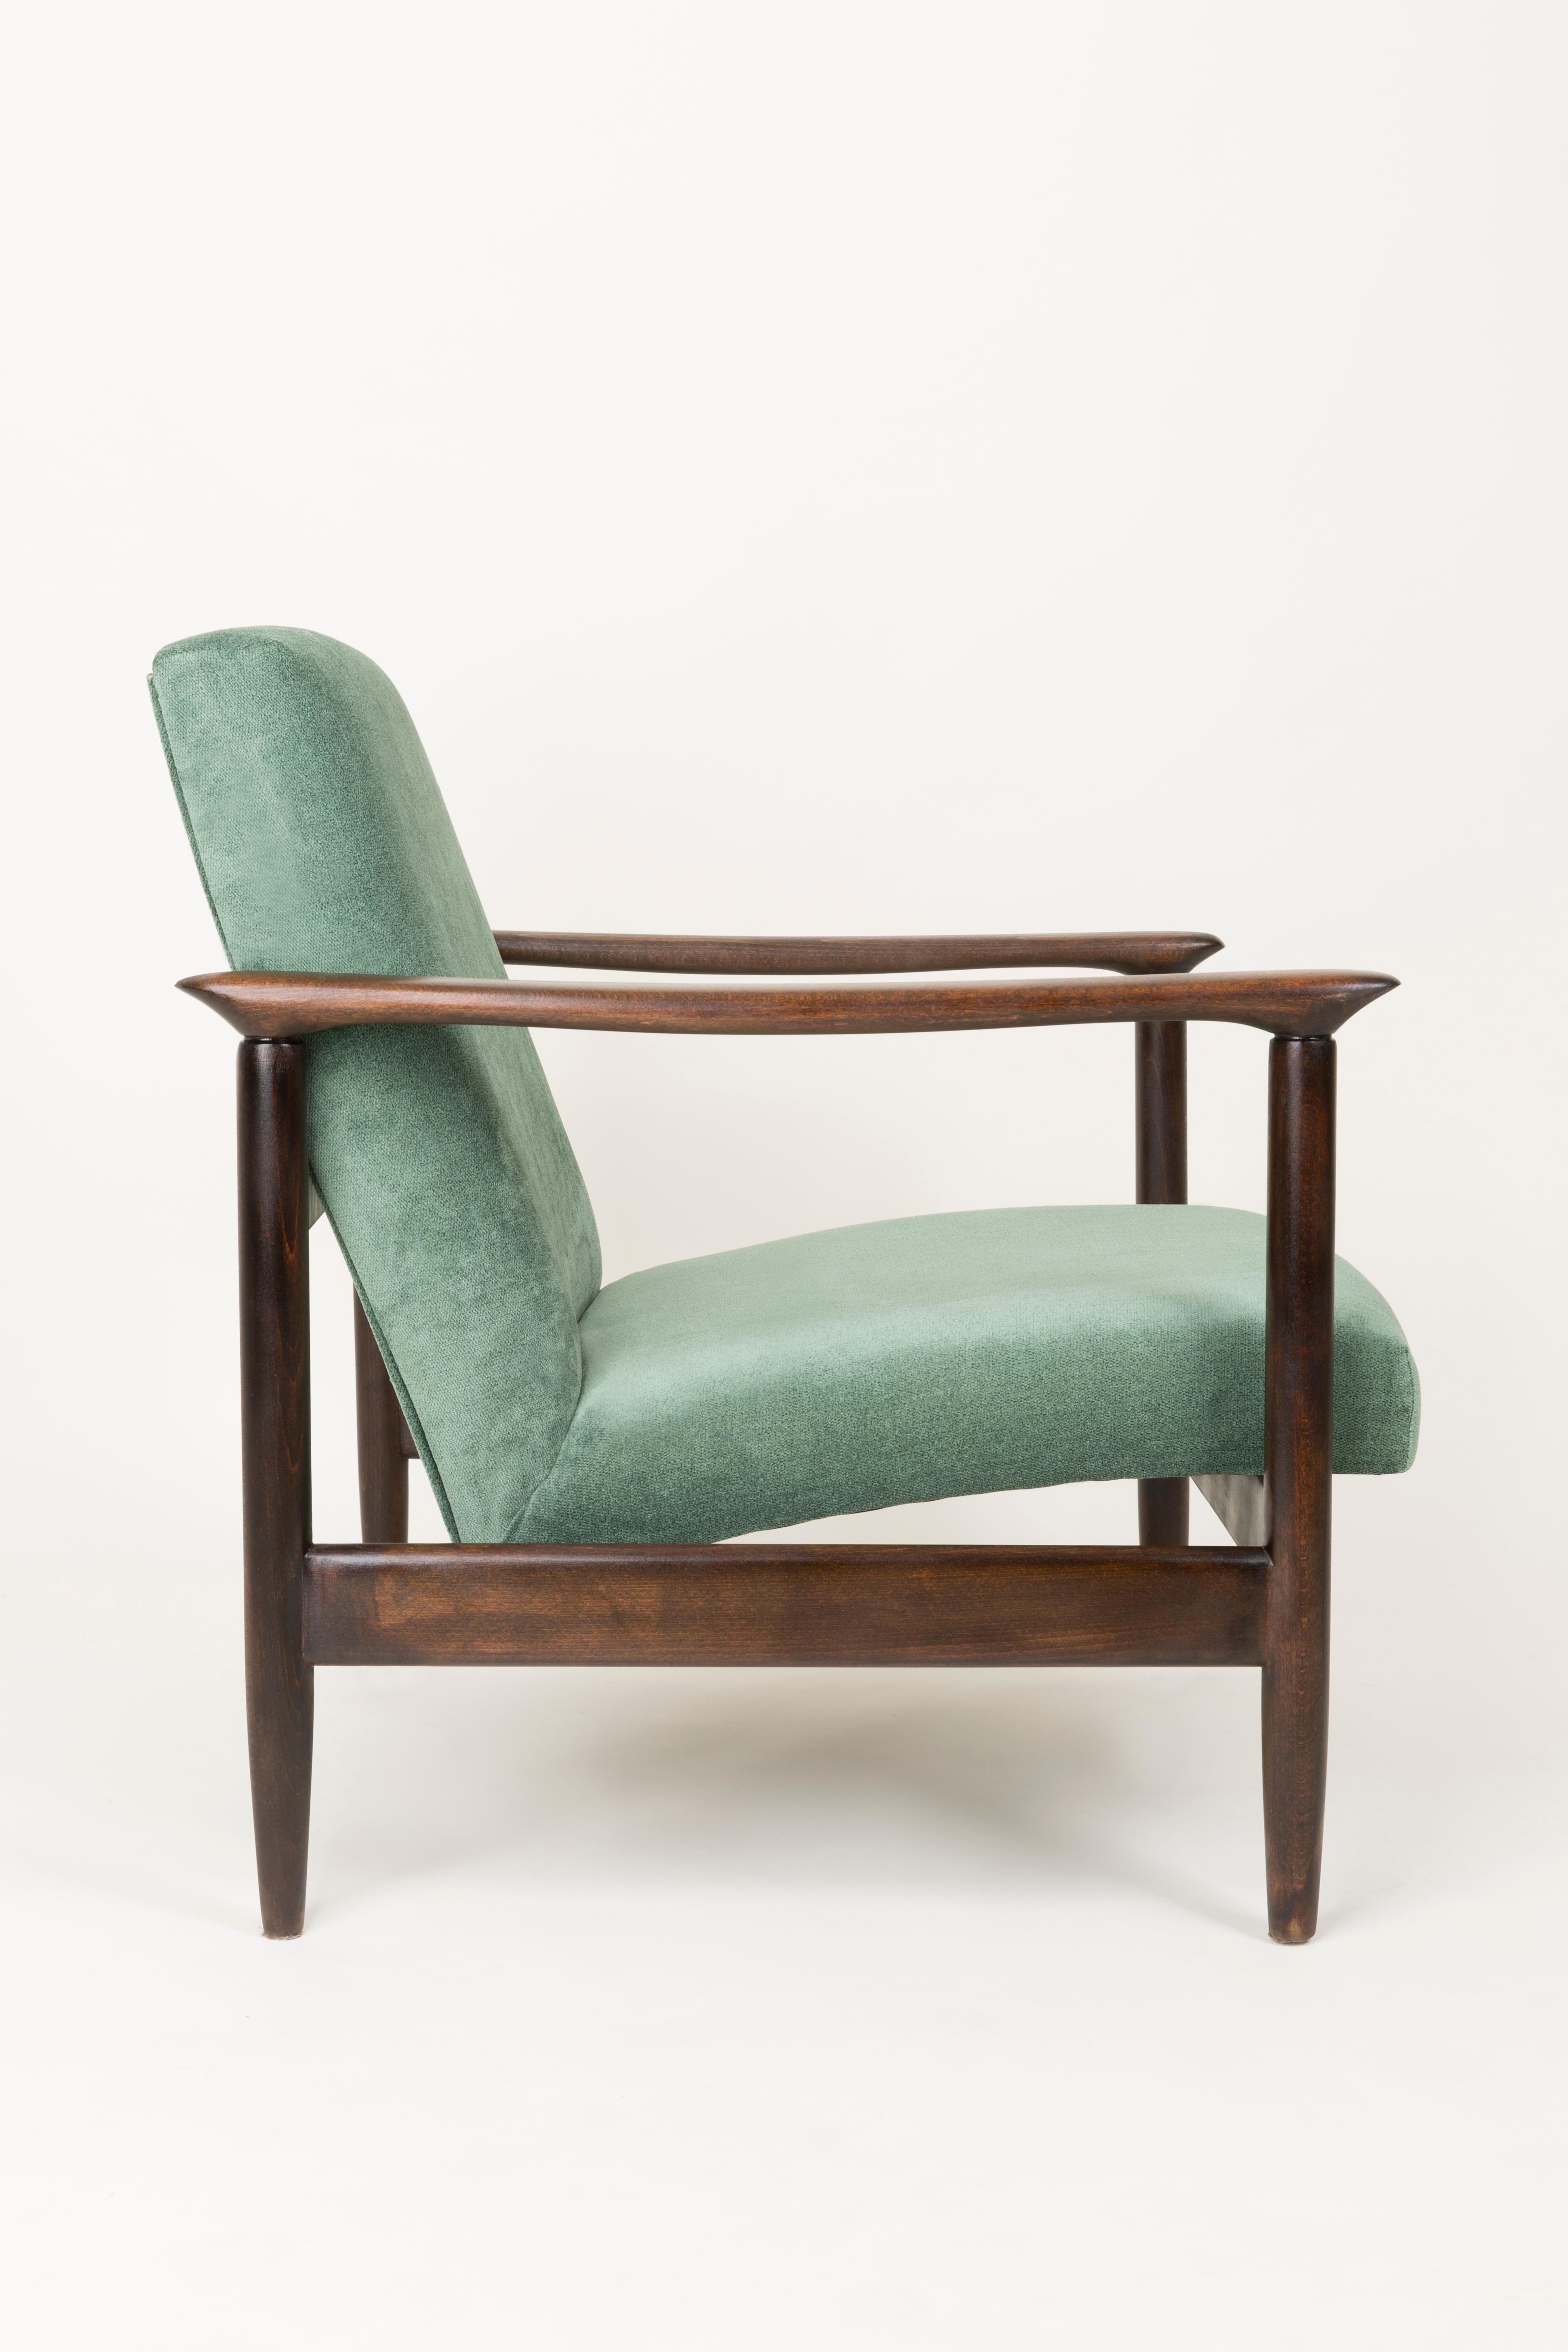 Ein Paar Sessel aus grünem Apfelholz, Edmund Homa, GFM-142, 1960er Jahre, Polen (20. Jahrhundert) im Angebot